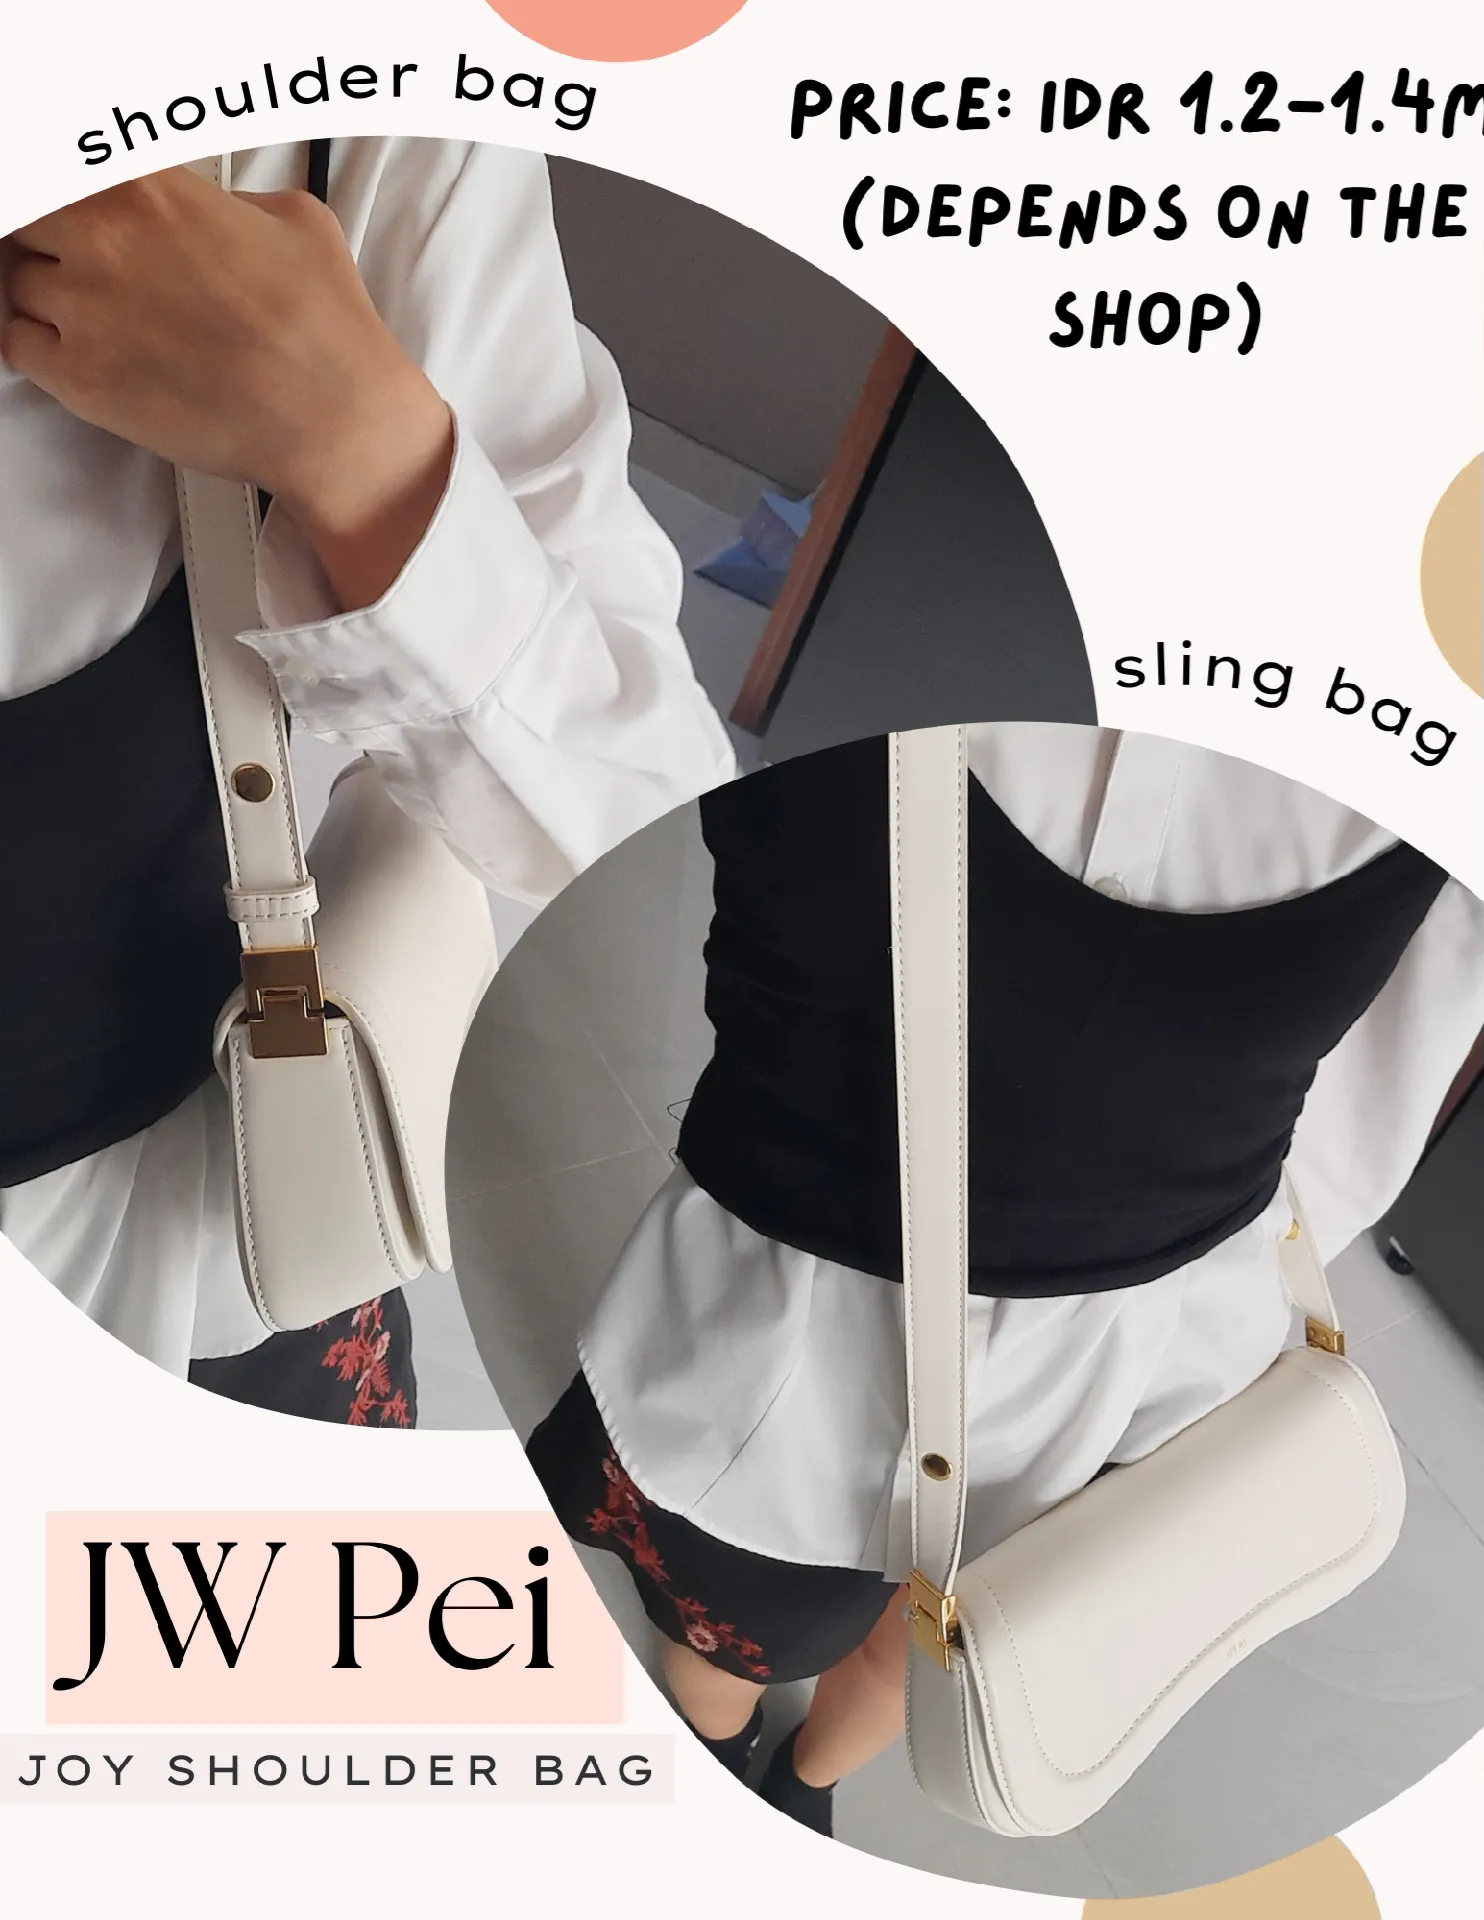 JW PEI Joy Shoulder Bag Review 